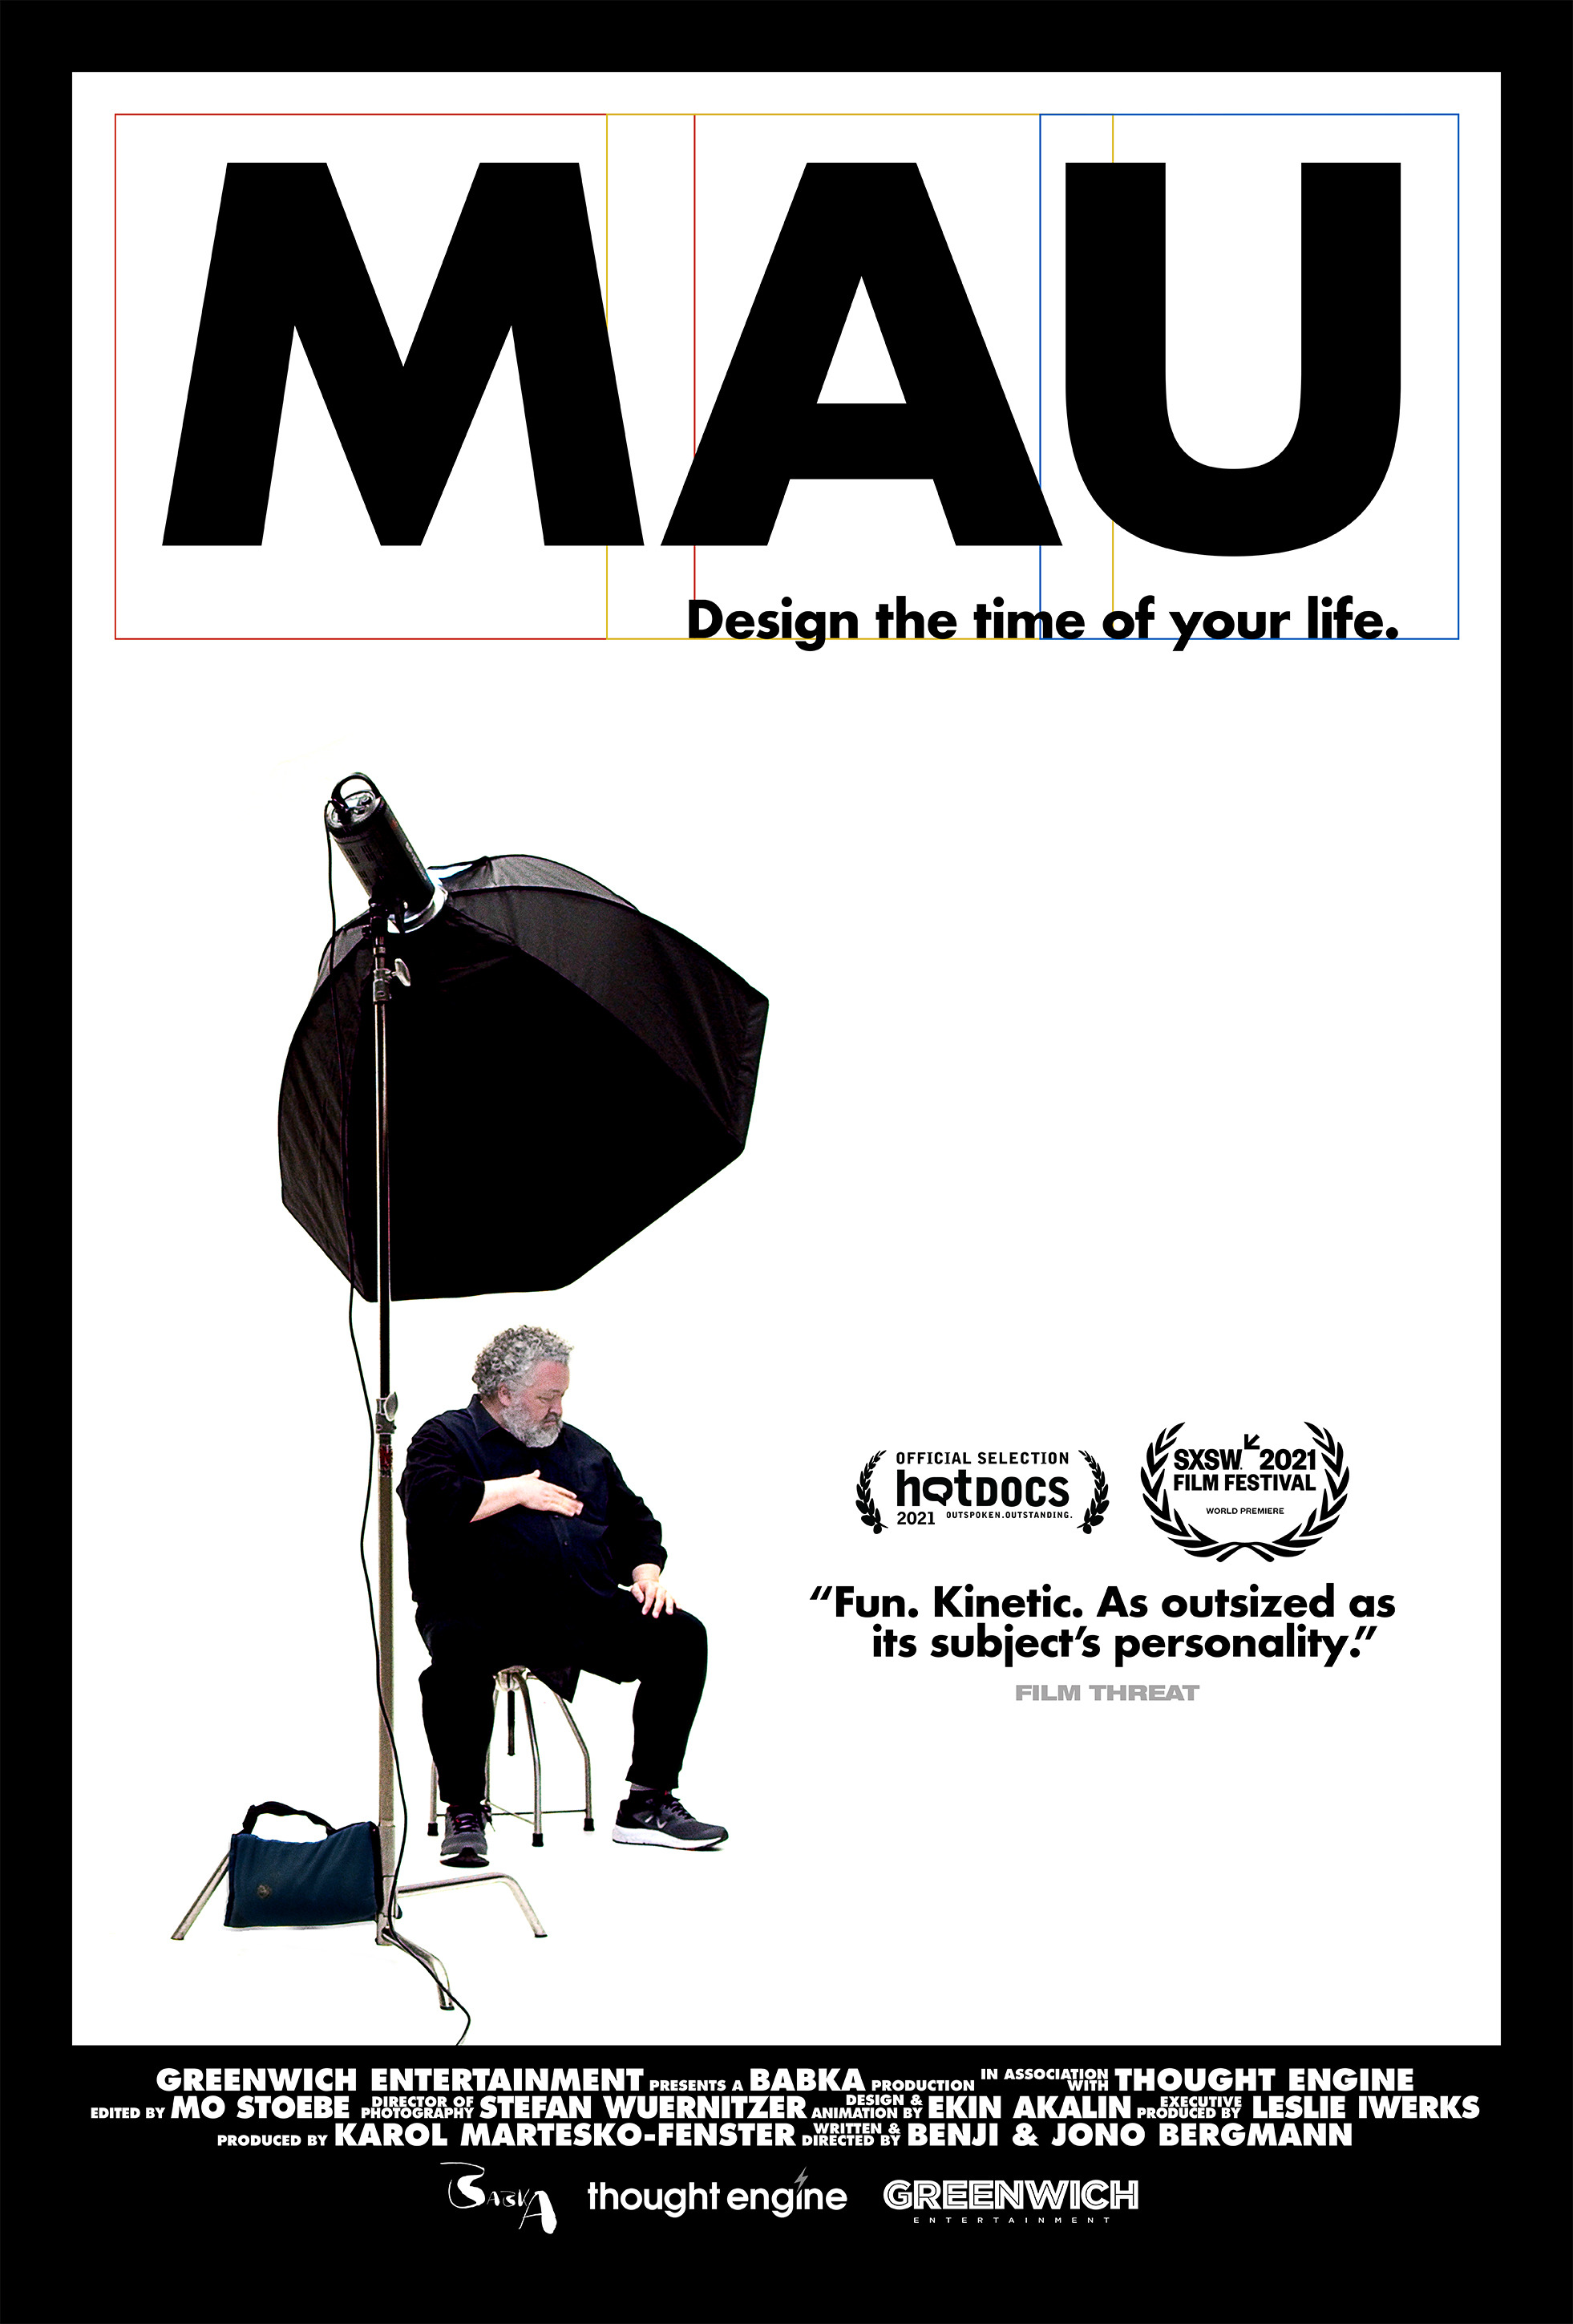 Resene Architecture & Design Film Festival: Mau